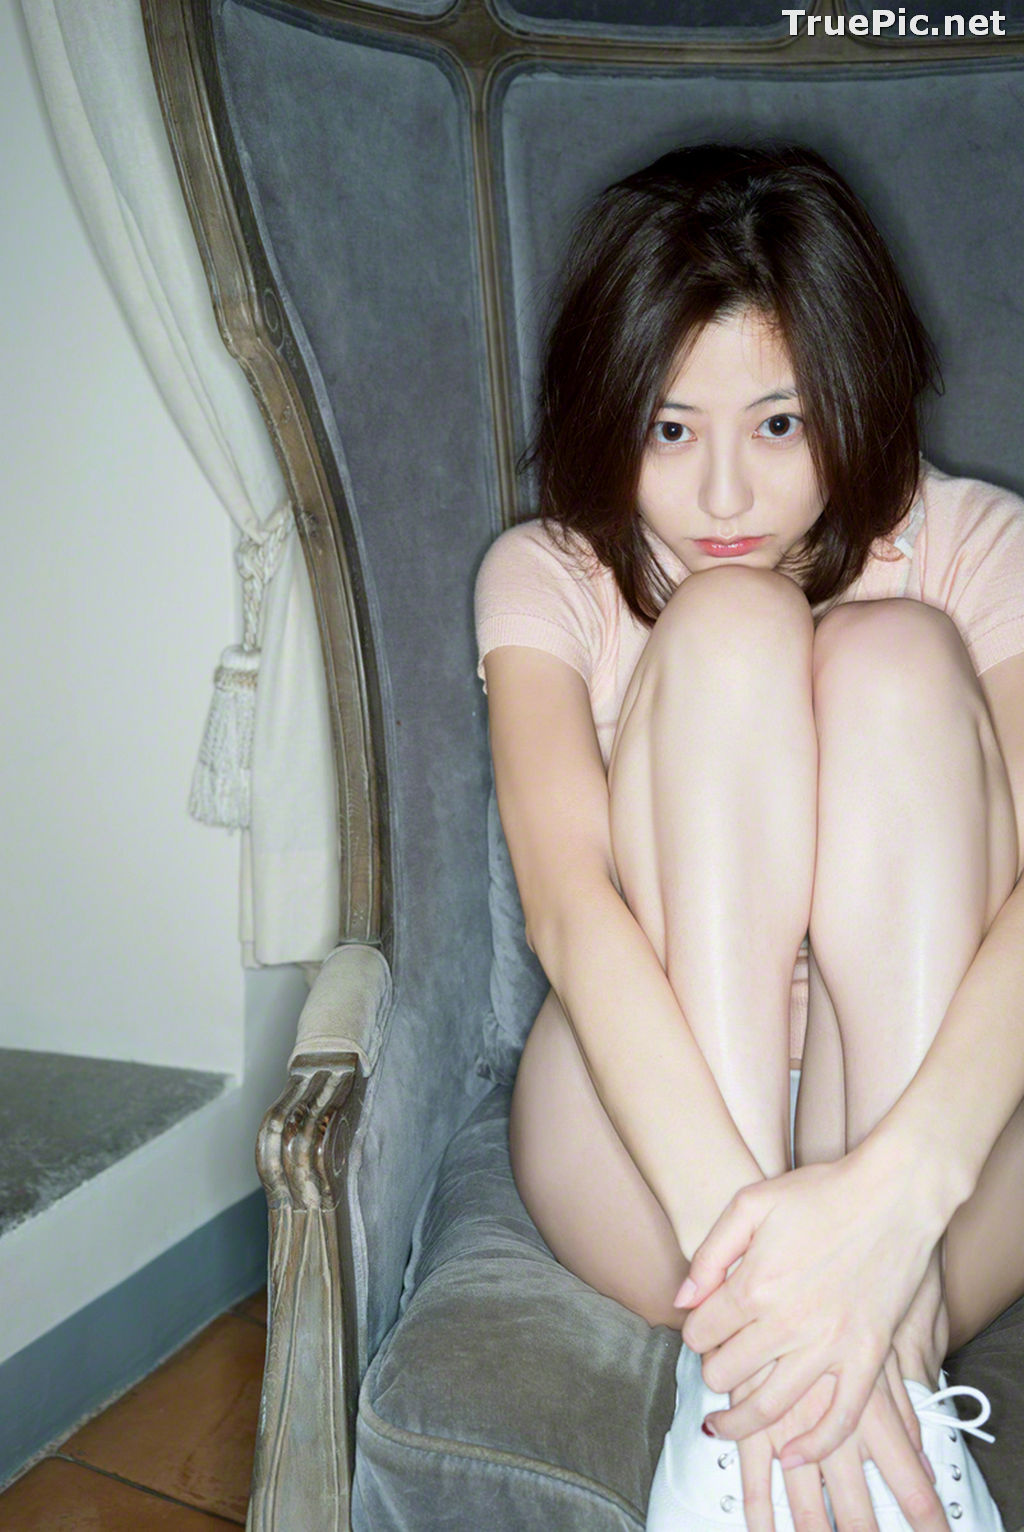 Image Wanibooks No.136 - Japanese Actress and Singer - Yumi Sugimoto - TruePic.net - Picture-133